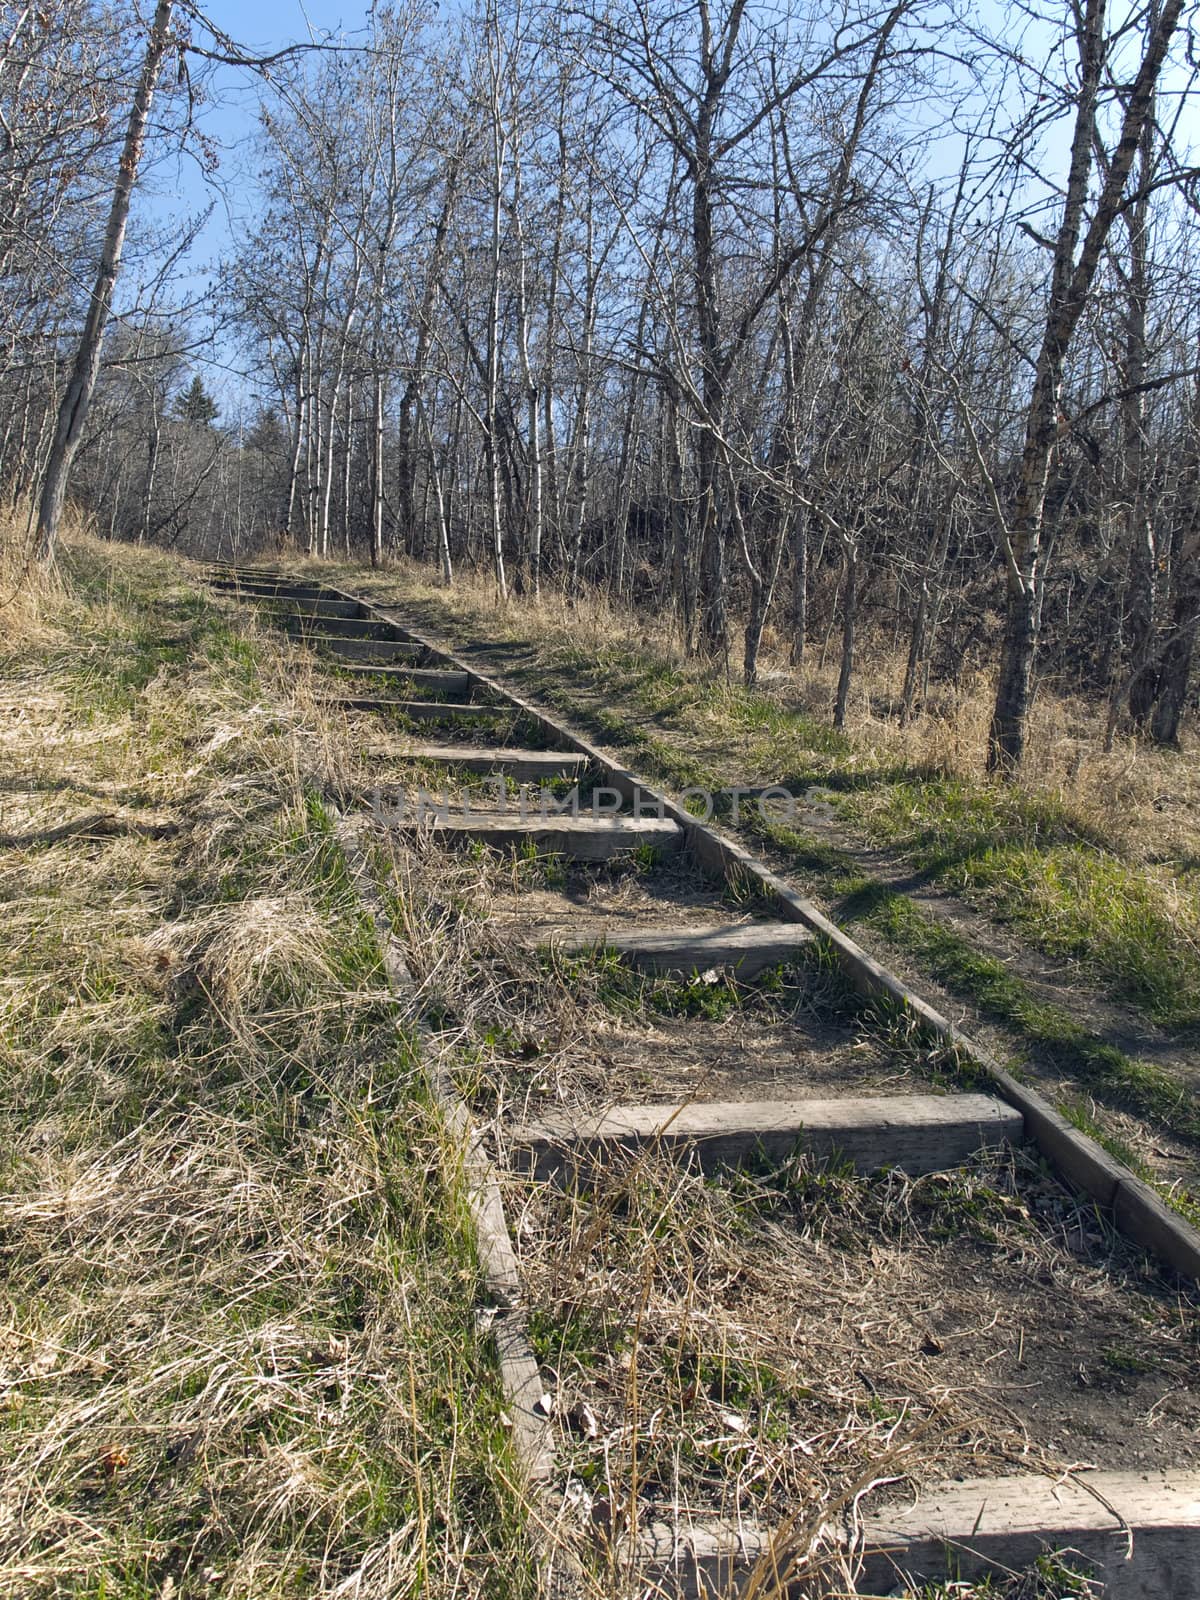 Steps along a path through a forest.